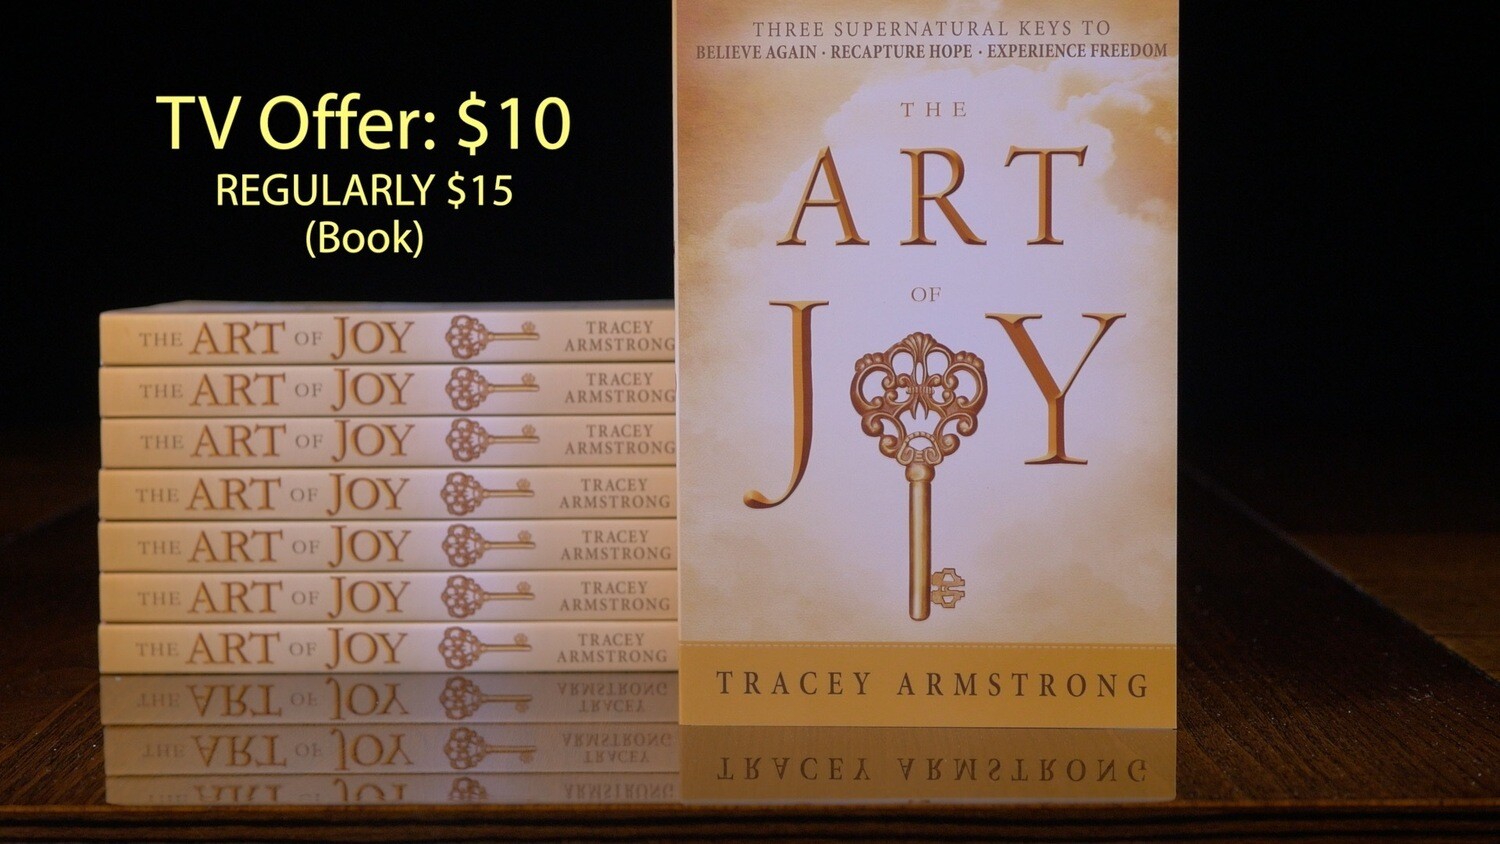 Art of Joy book special TV offer